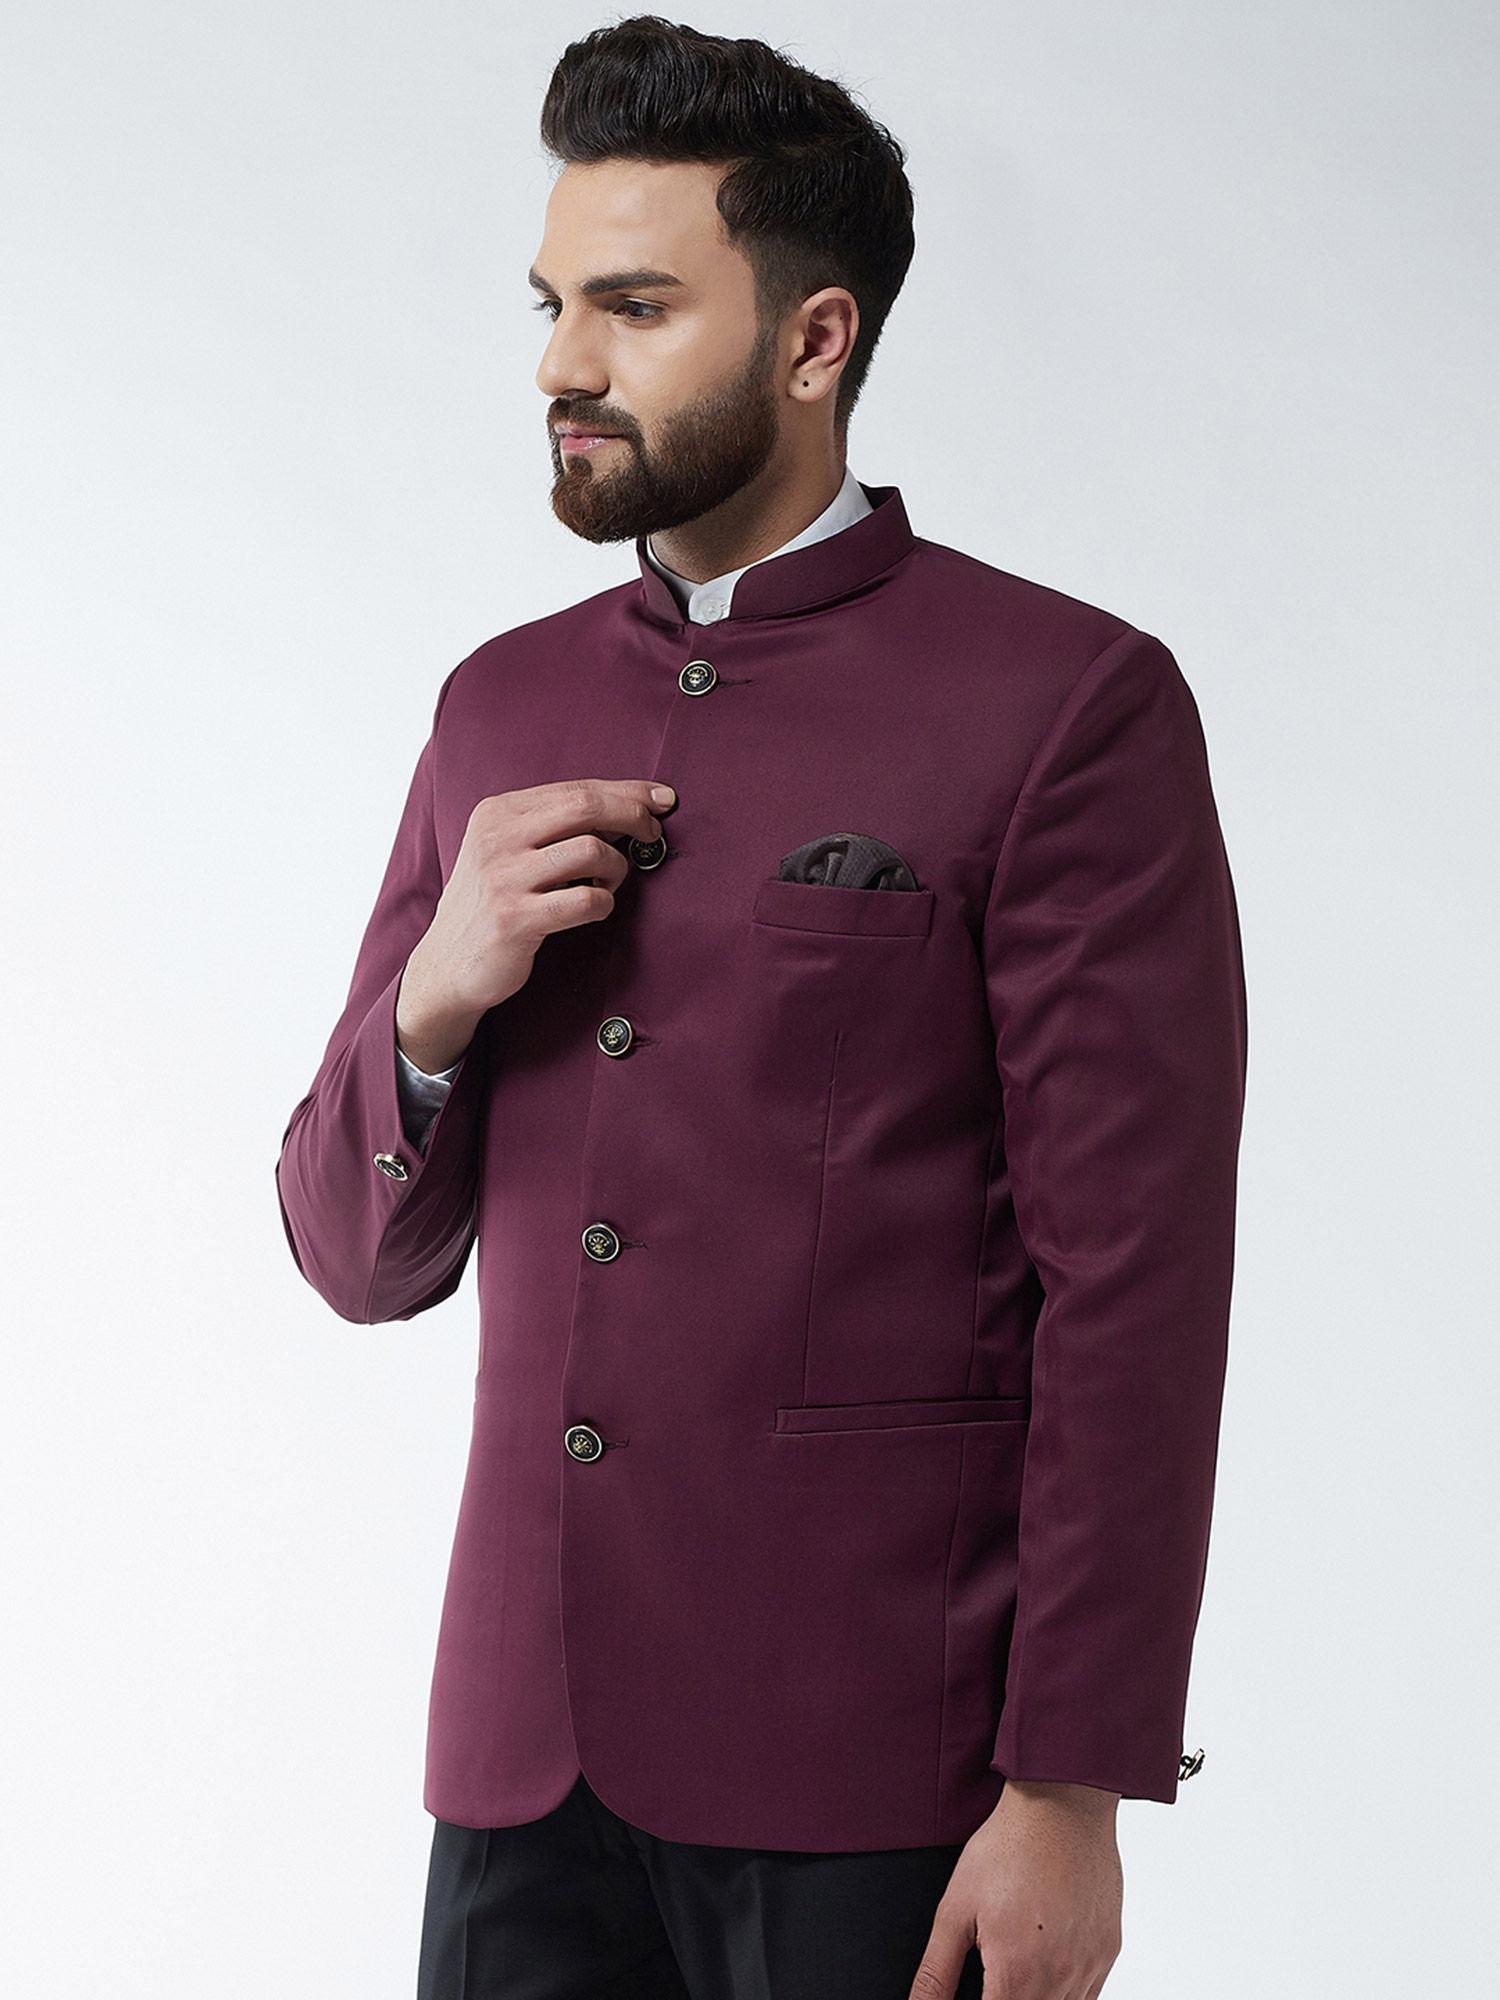 men-cotton-blend-purple-solid-blazer